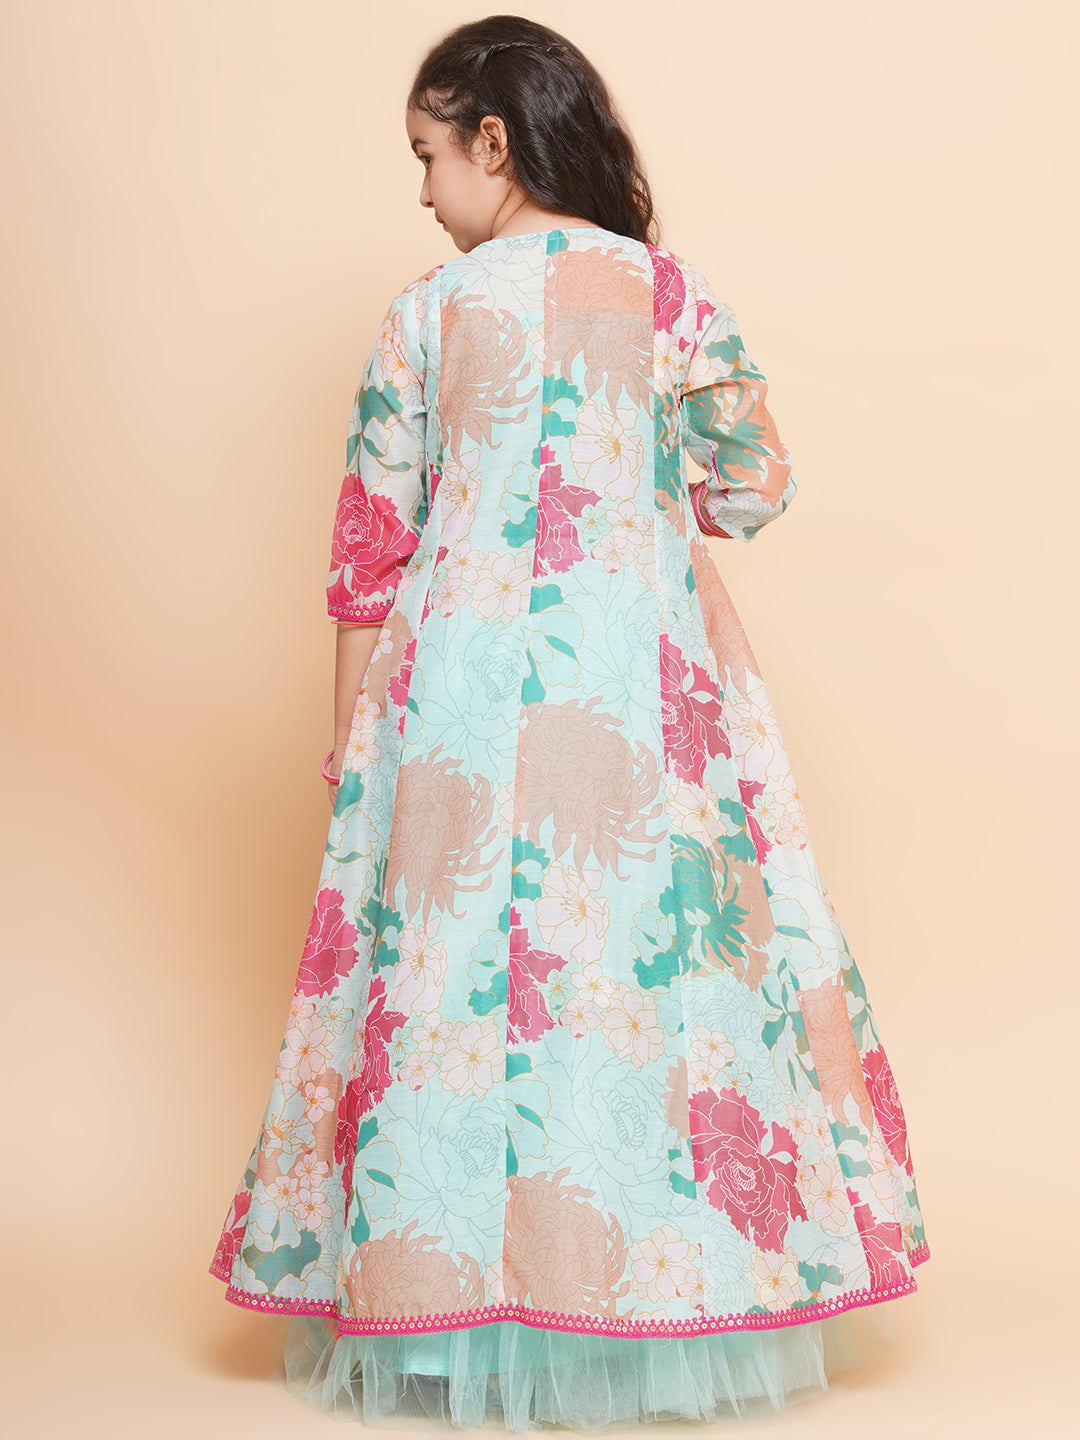 Girls Sea Green Multi Floral Print Lehenga Dress & Blouse With Shrug